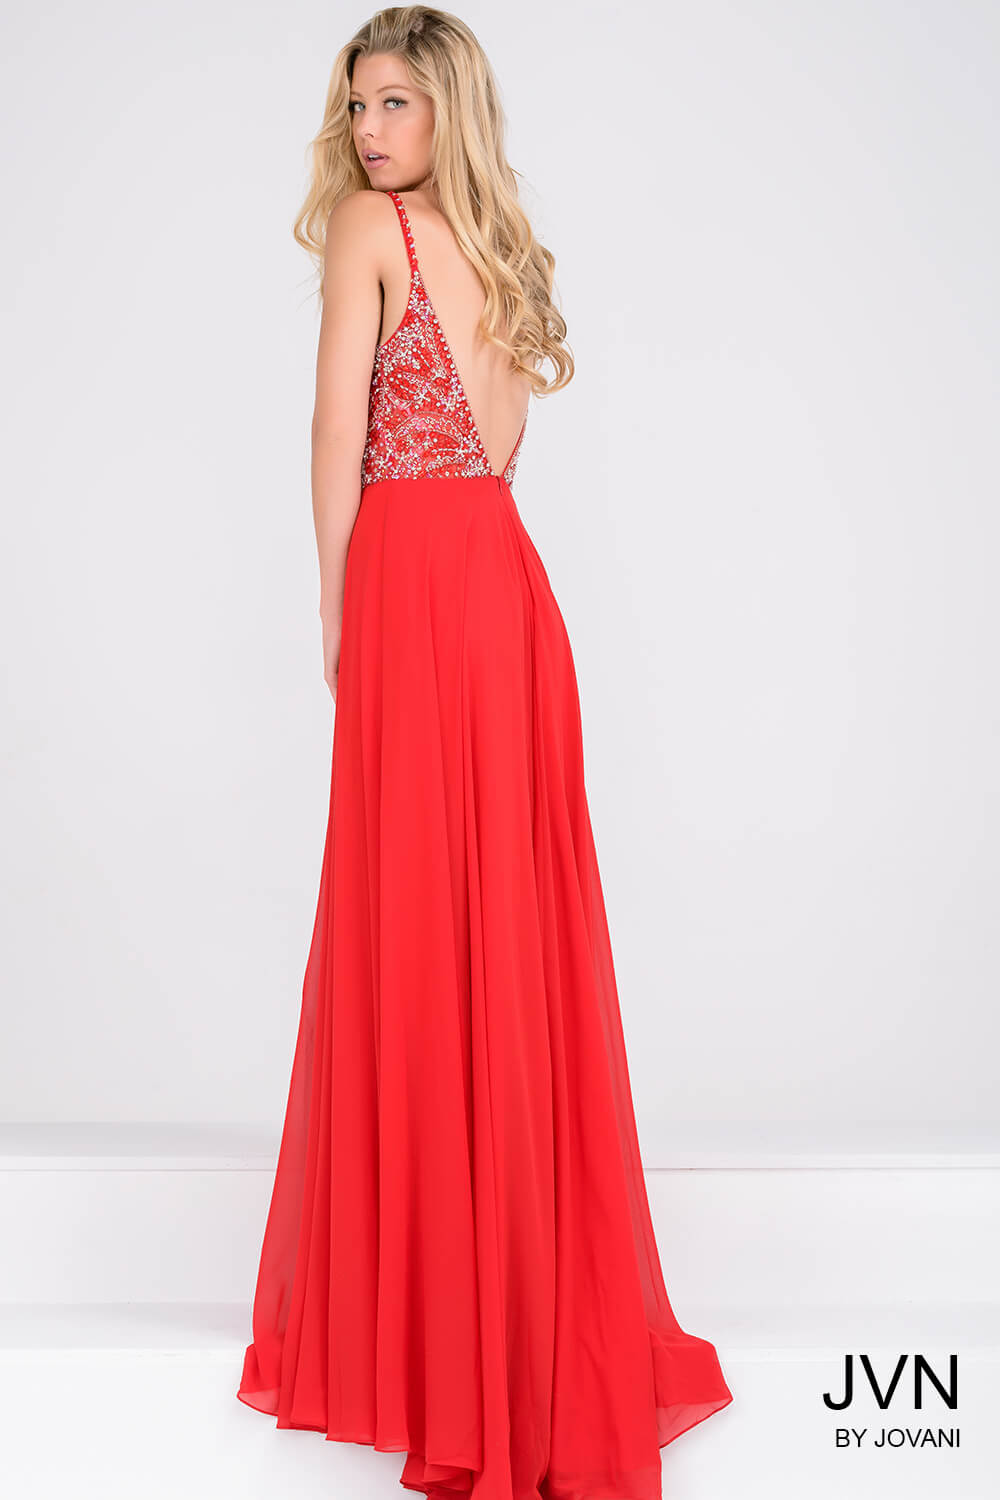 JVN33701 Dress Red Chiffon Dress with Beaded Bodice